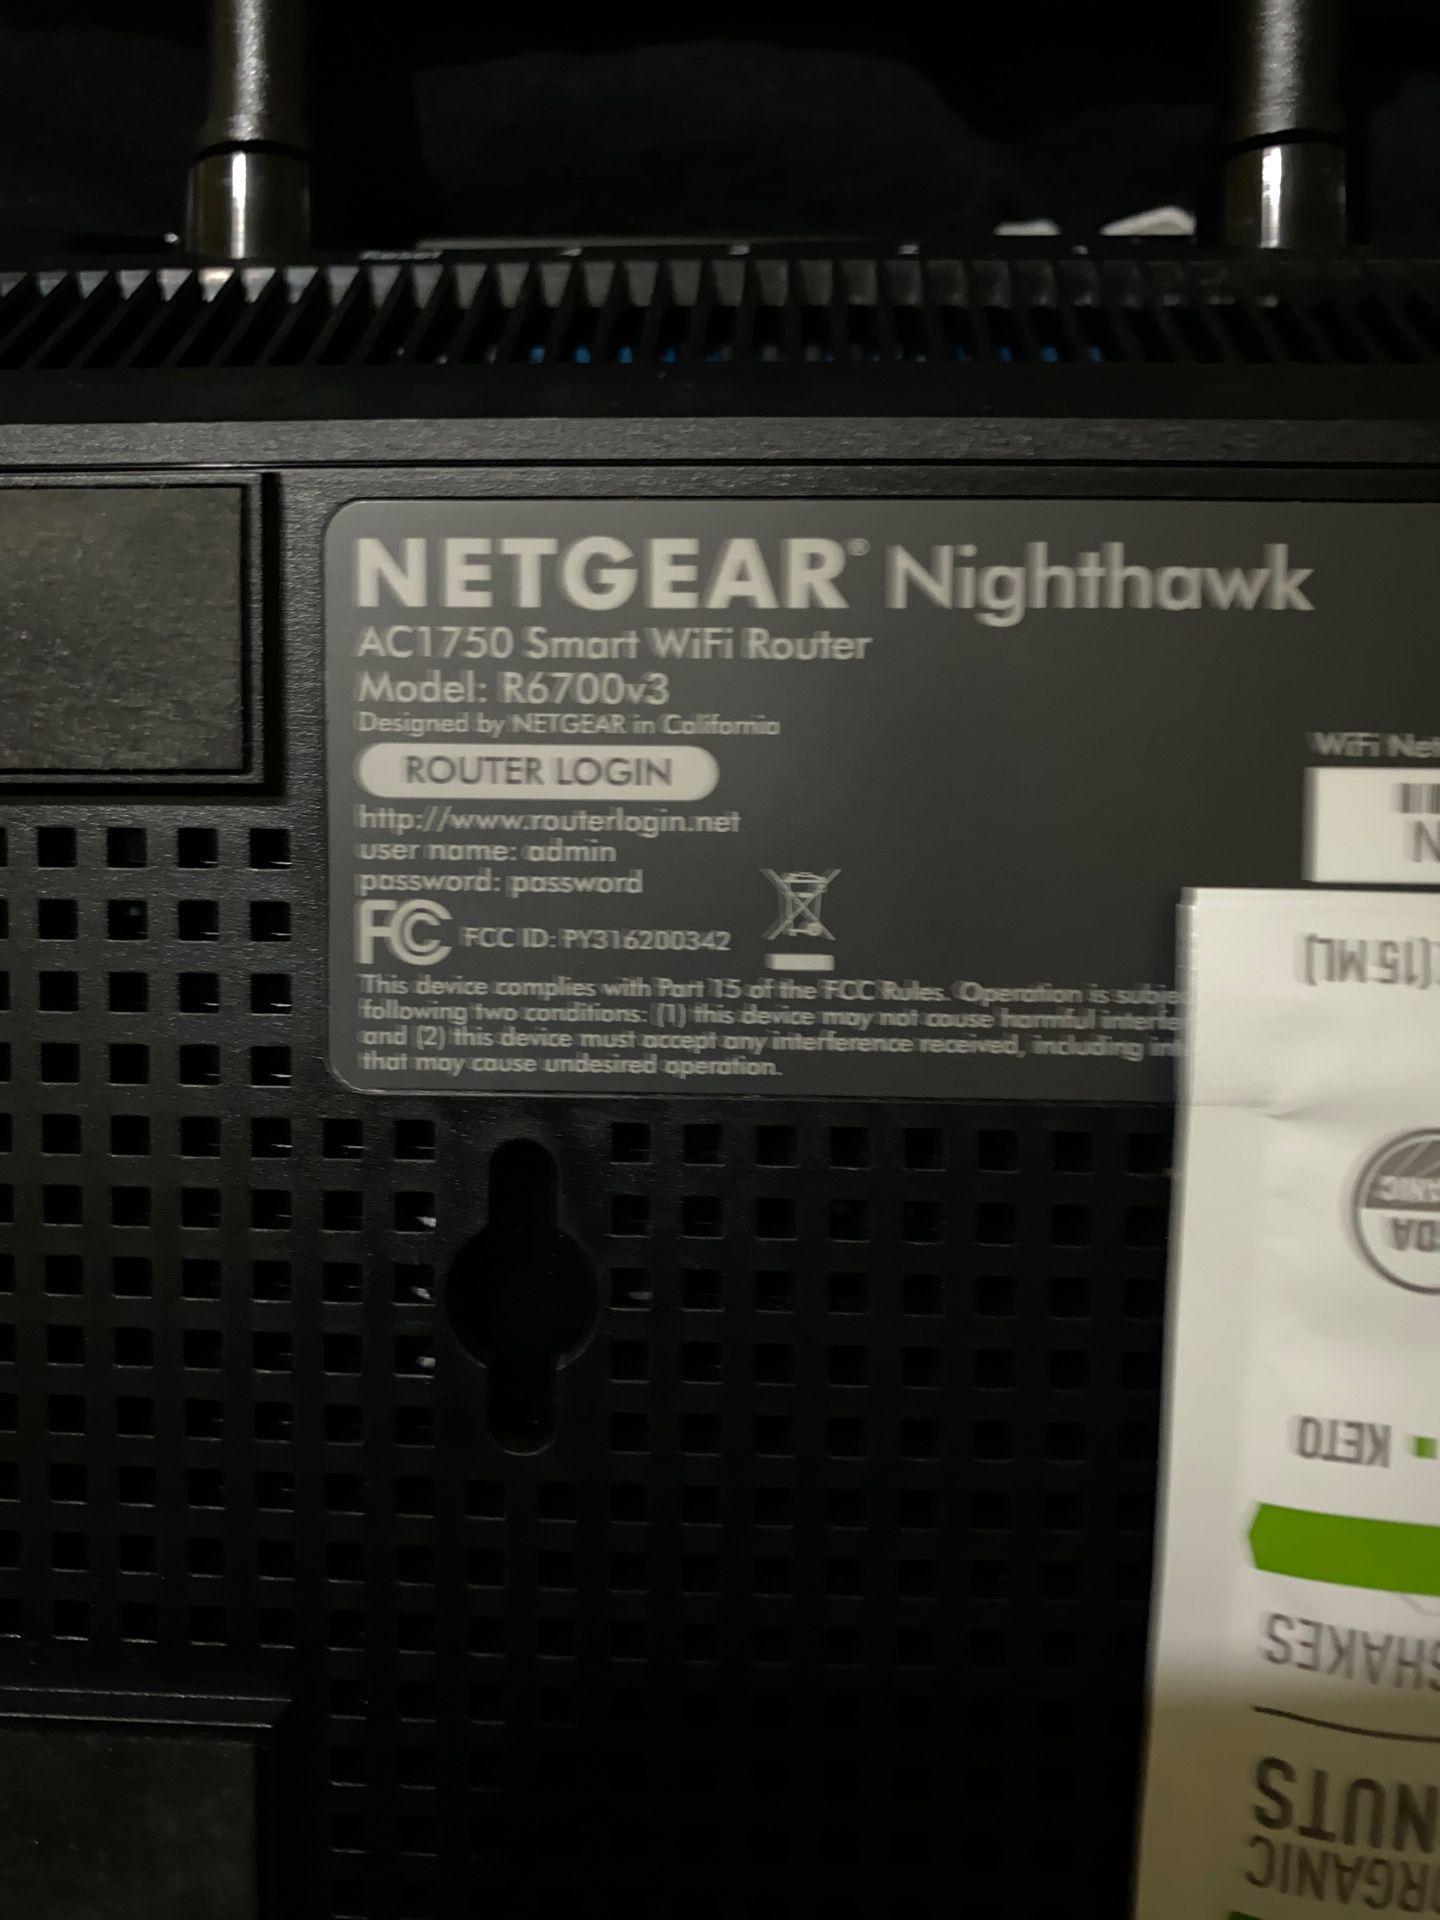 Netgear Nighthawk AC 1750 smart WiFi Router (barely used)